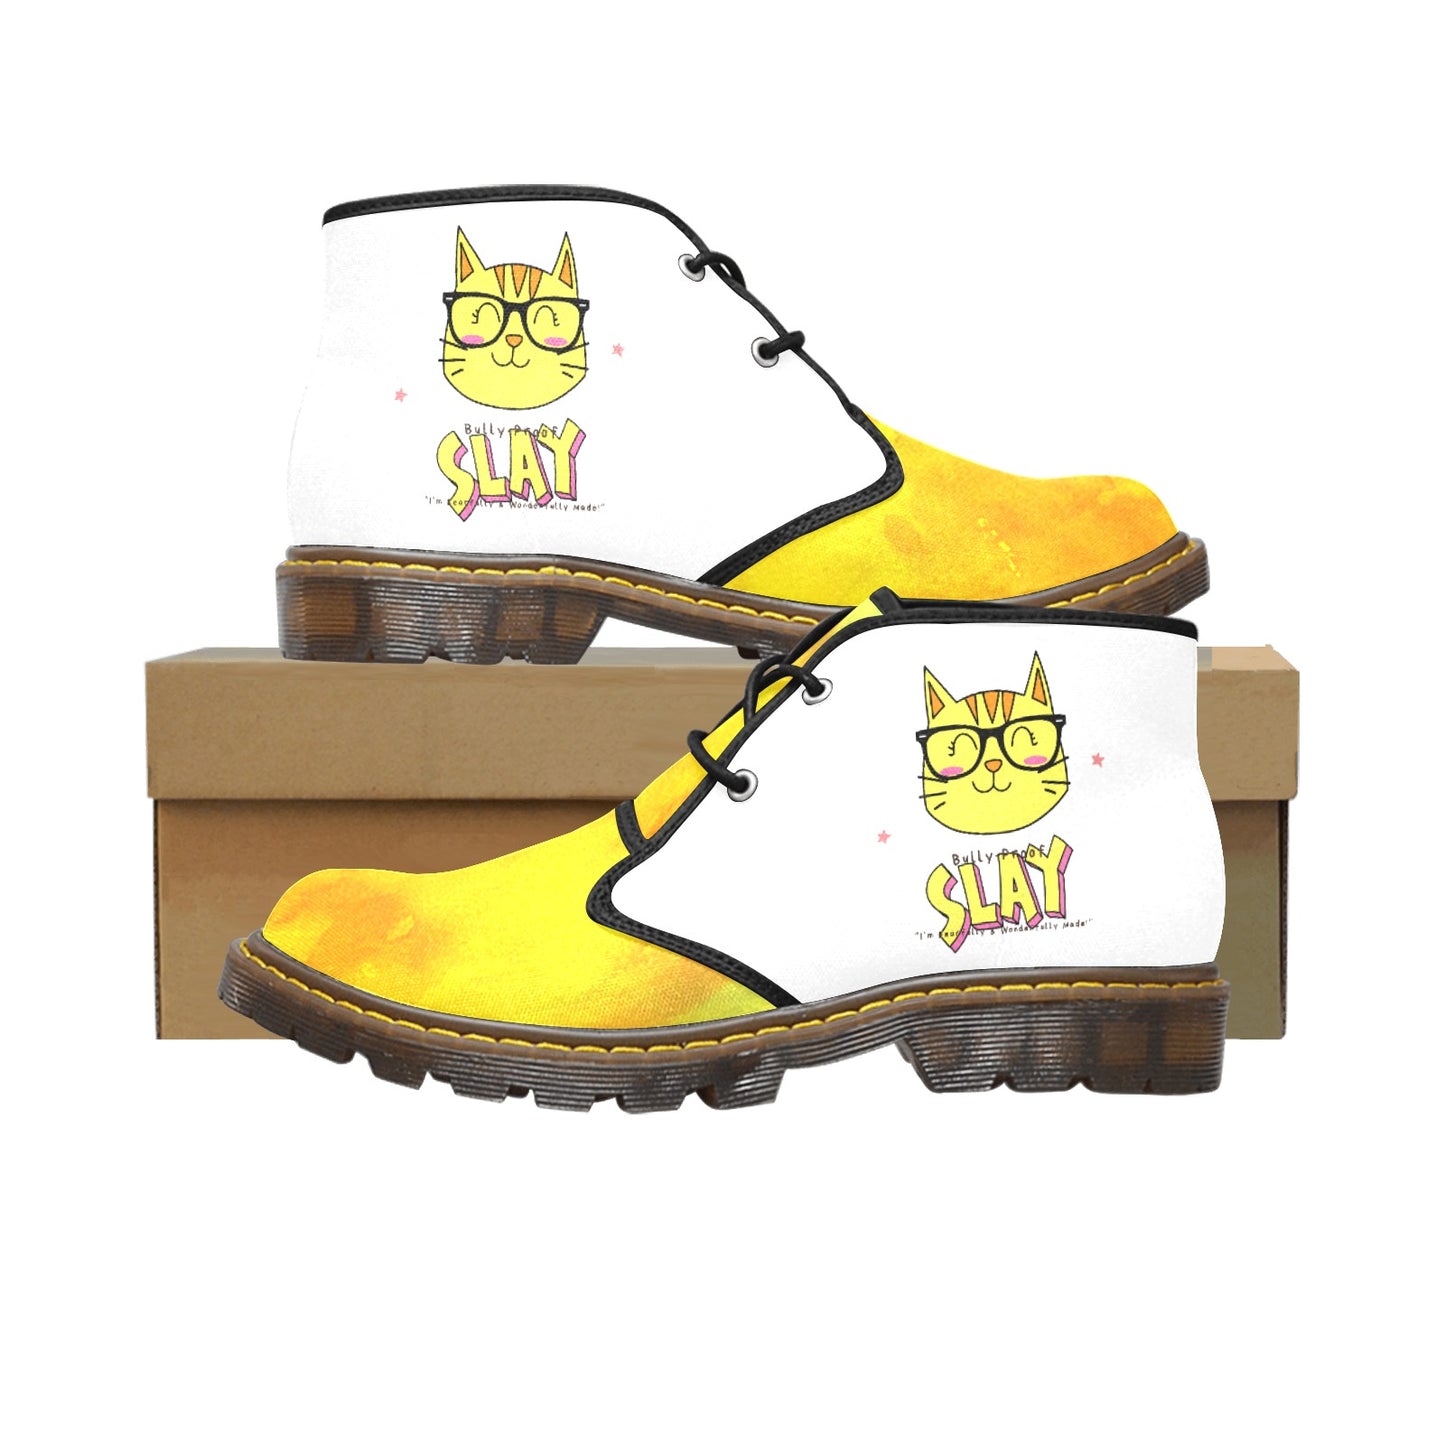 Bully-Proof Da Nerd Kat Slay Men's Canvas Chukka Boots (Model 2402-1)